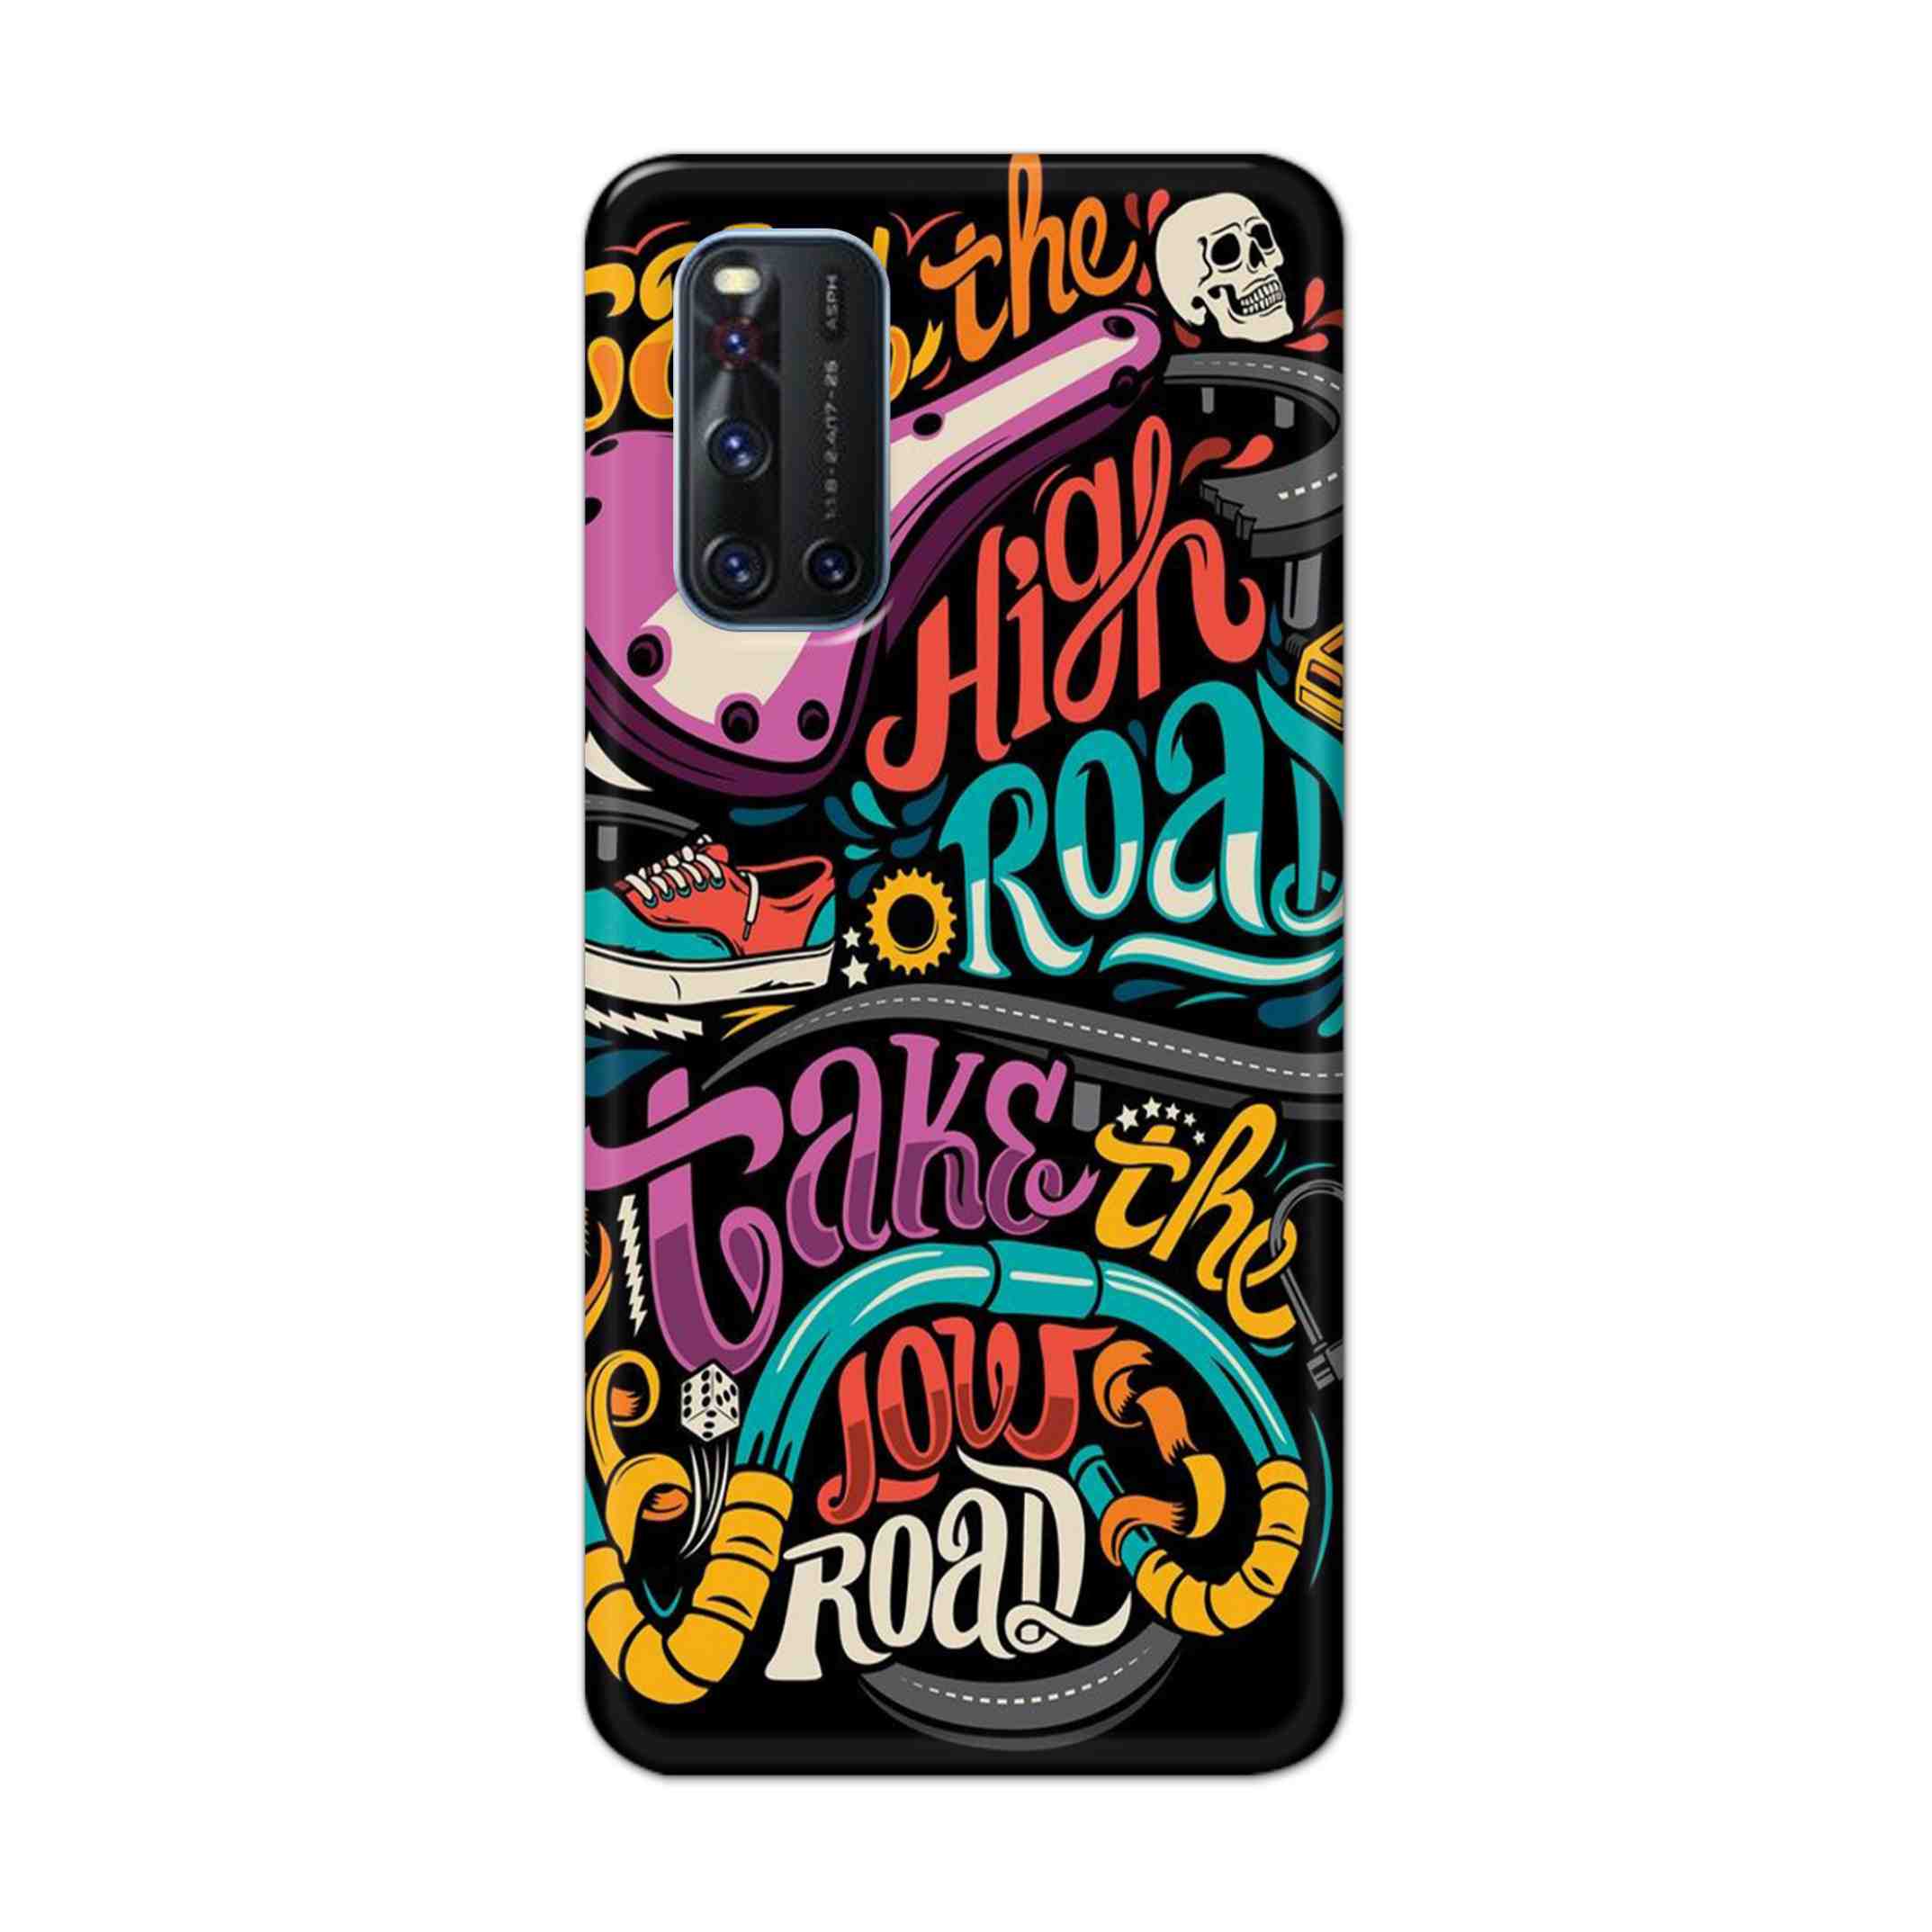 Buy Take The High Road Hard Back Mobile Phone Case Cover For VivoV19 Online